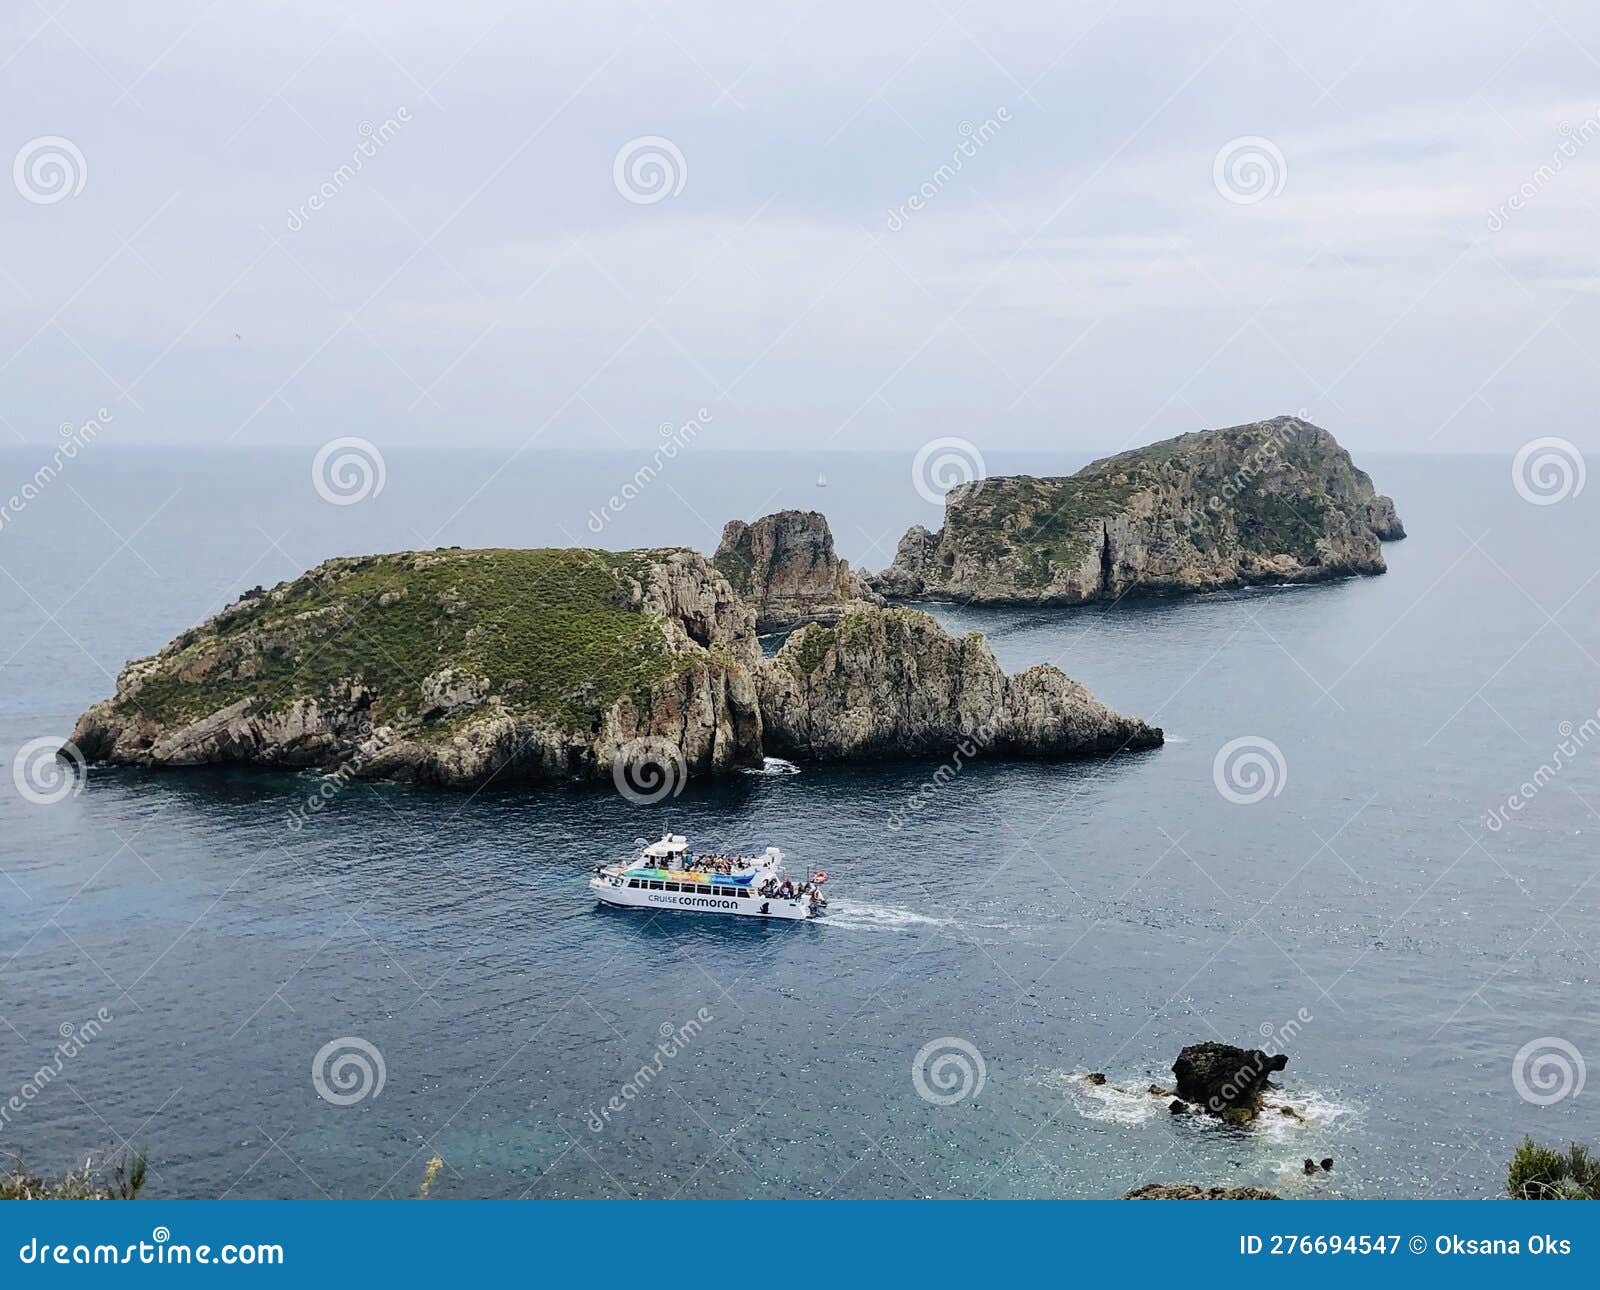 yachts in the bay of mallorca, balearic islands, spain